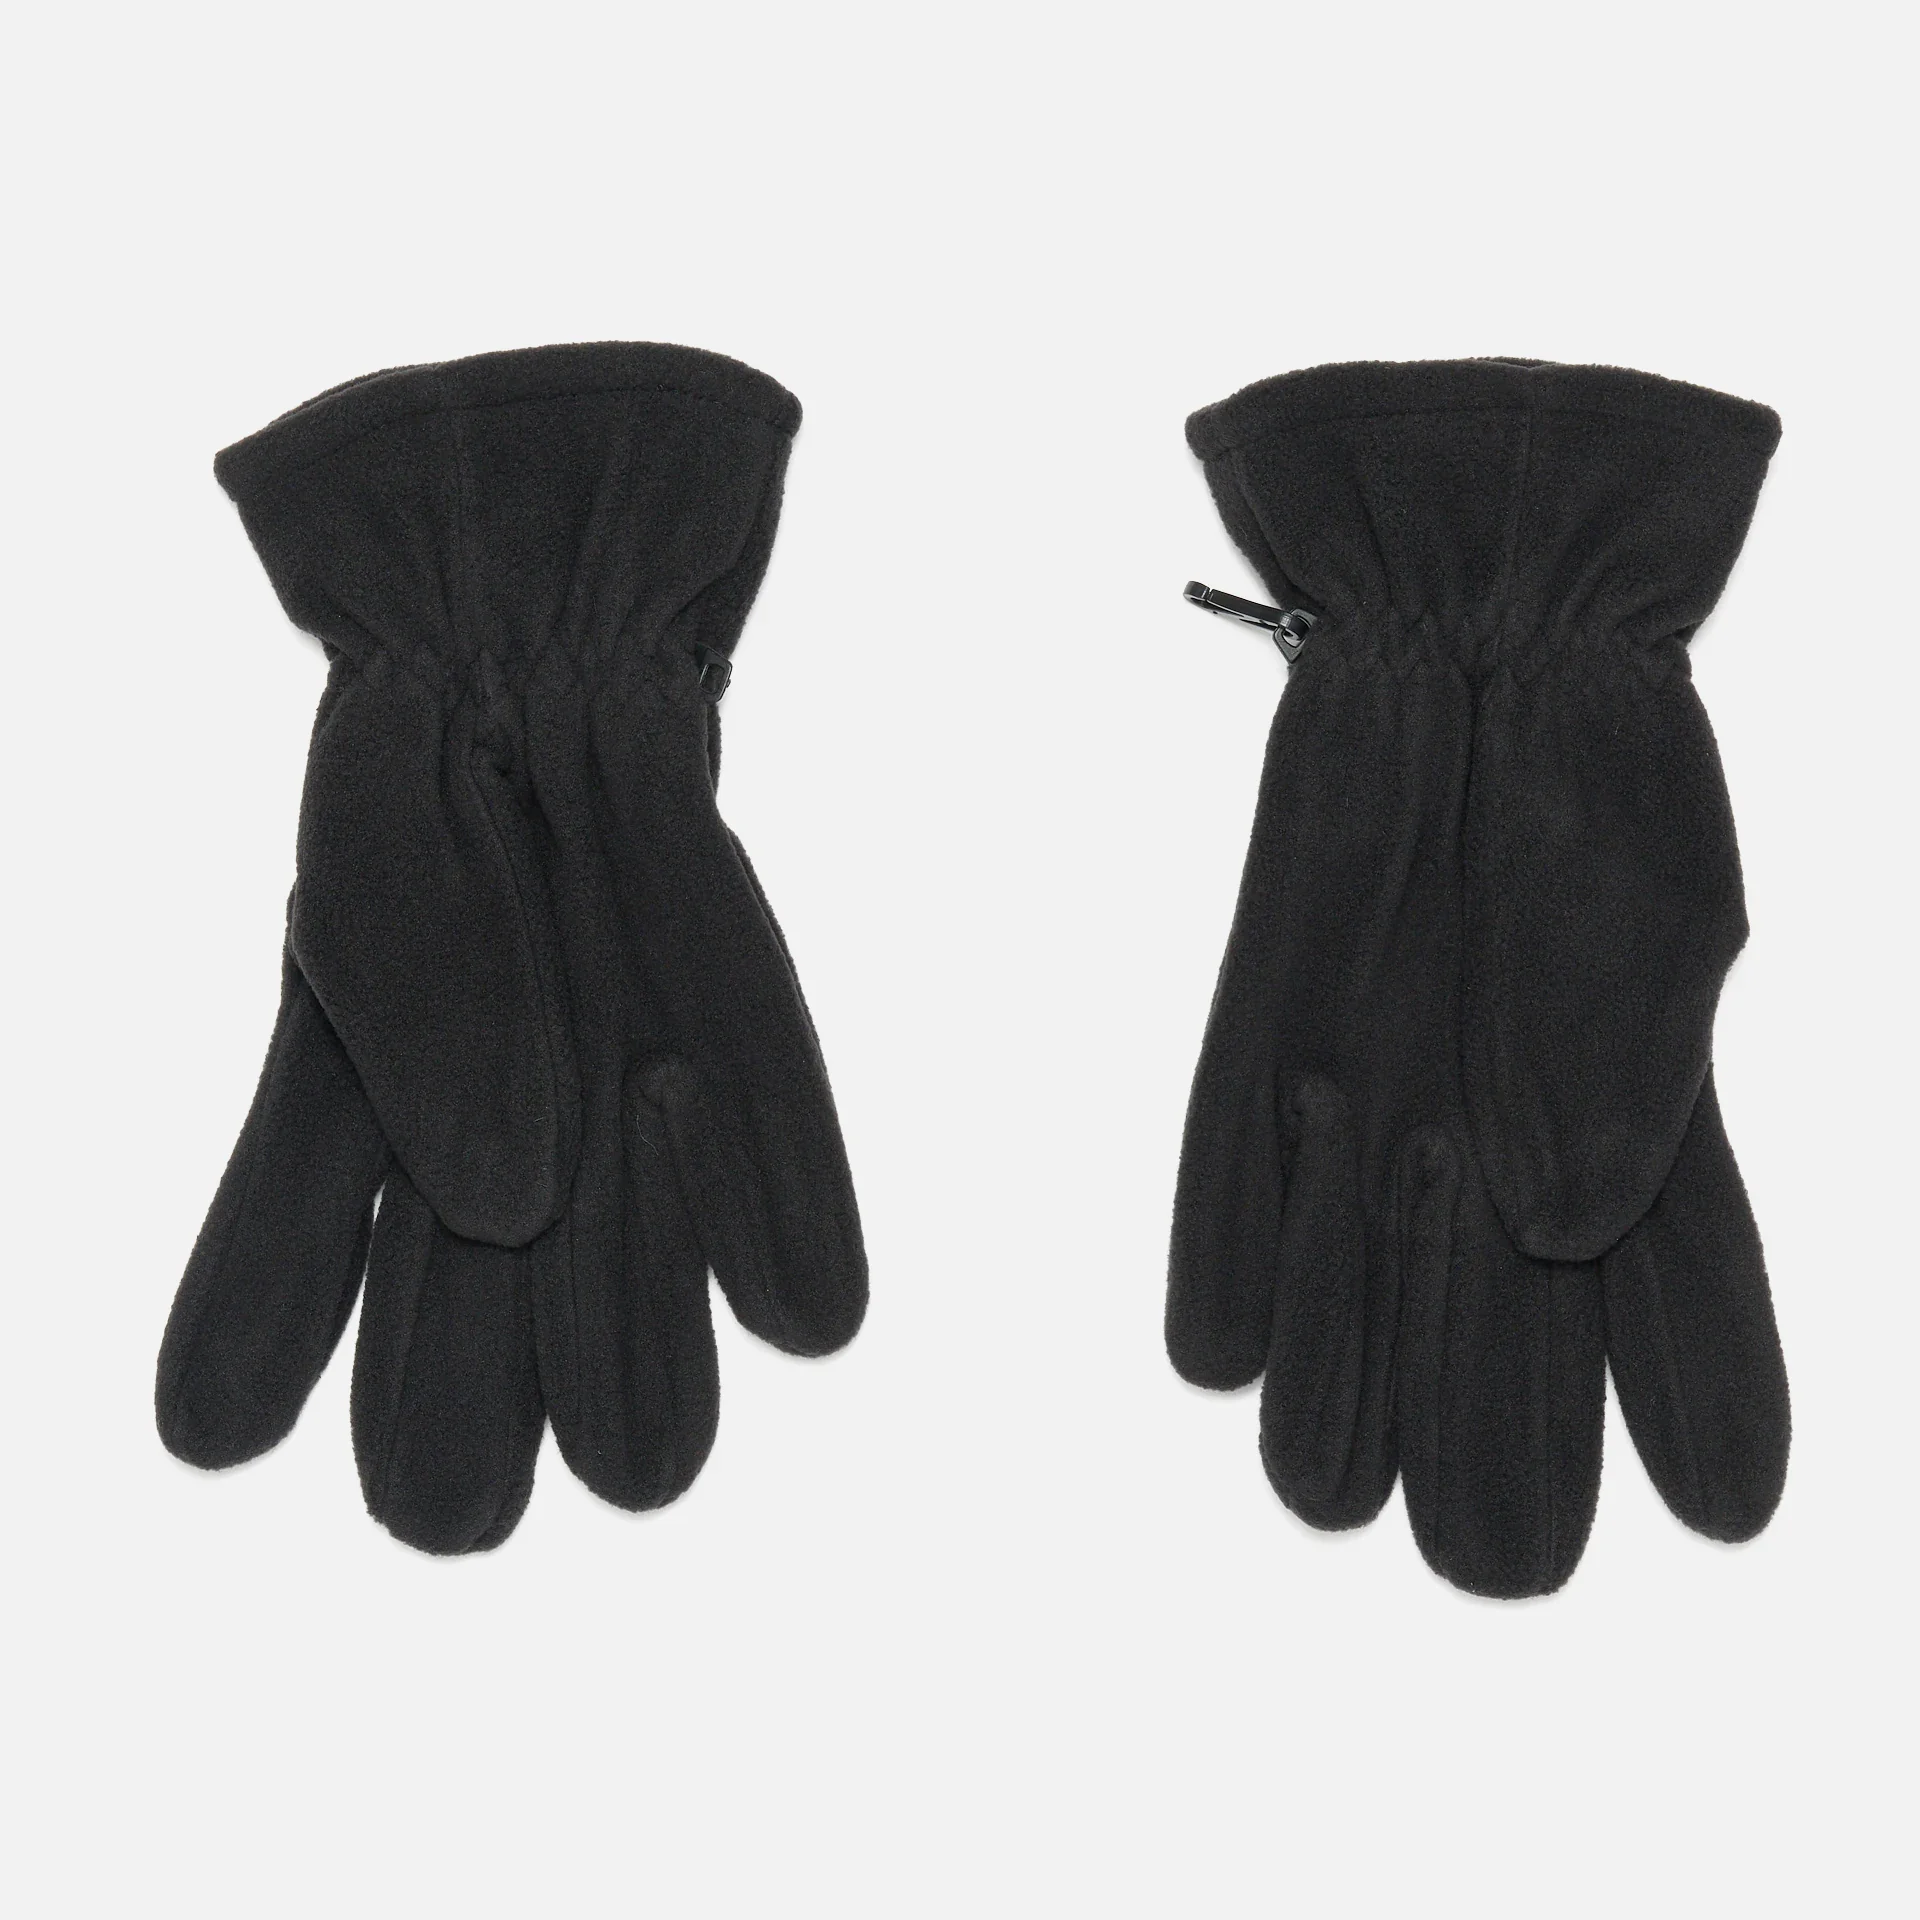 Alpha Industries Label Fleece Gloves Black